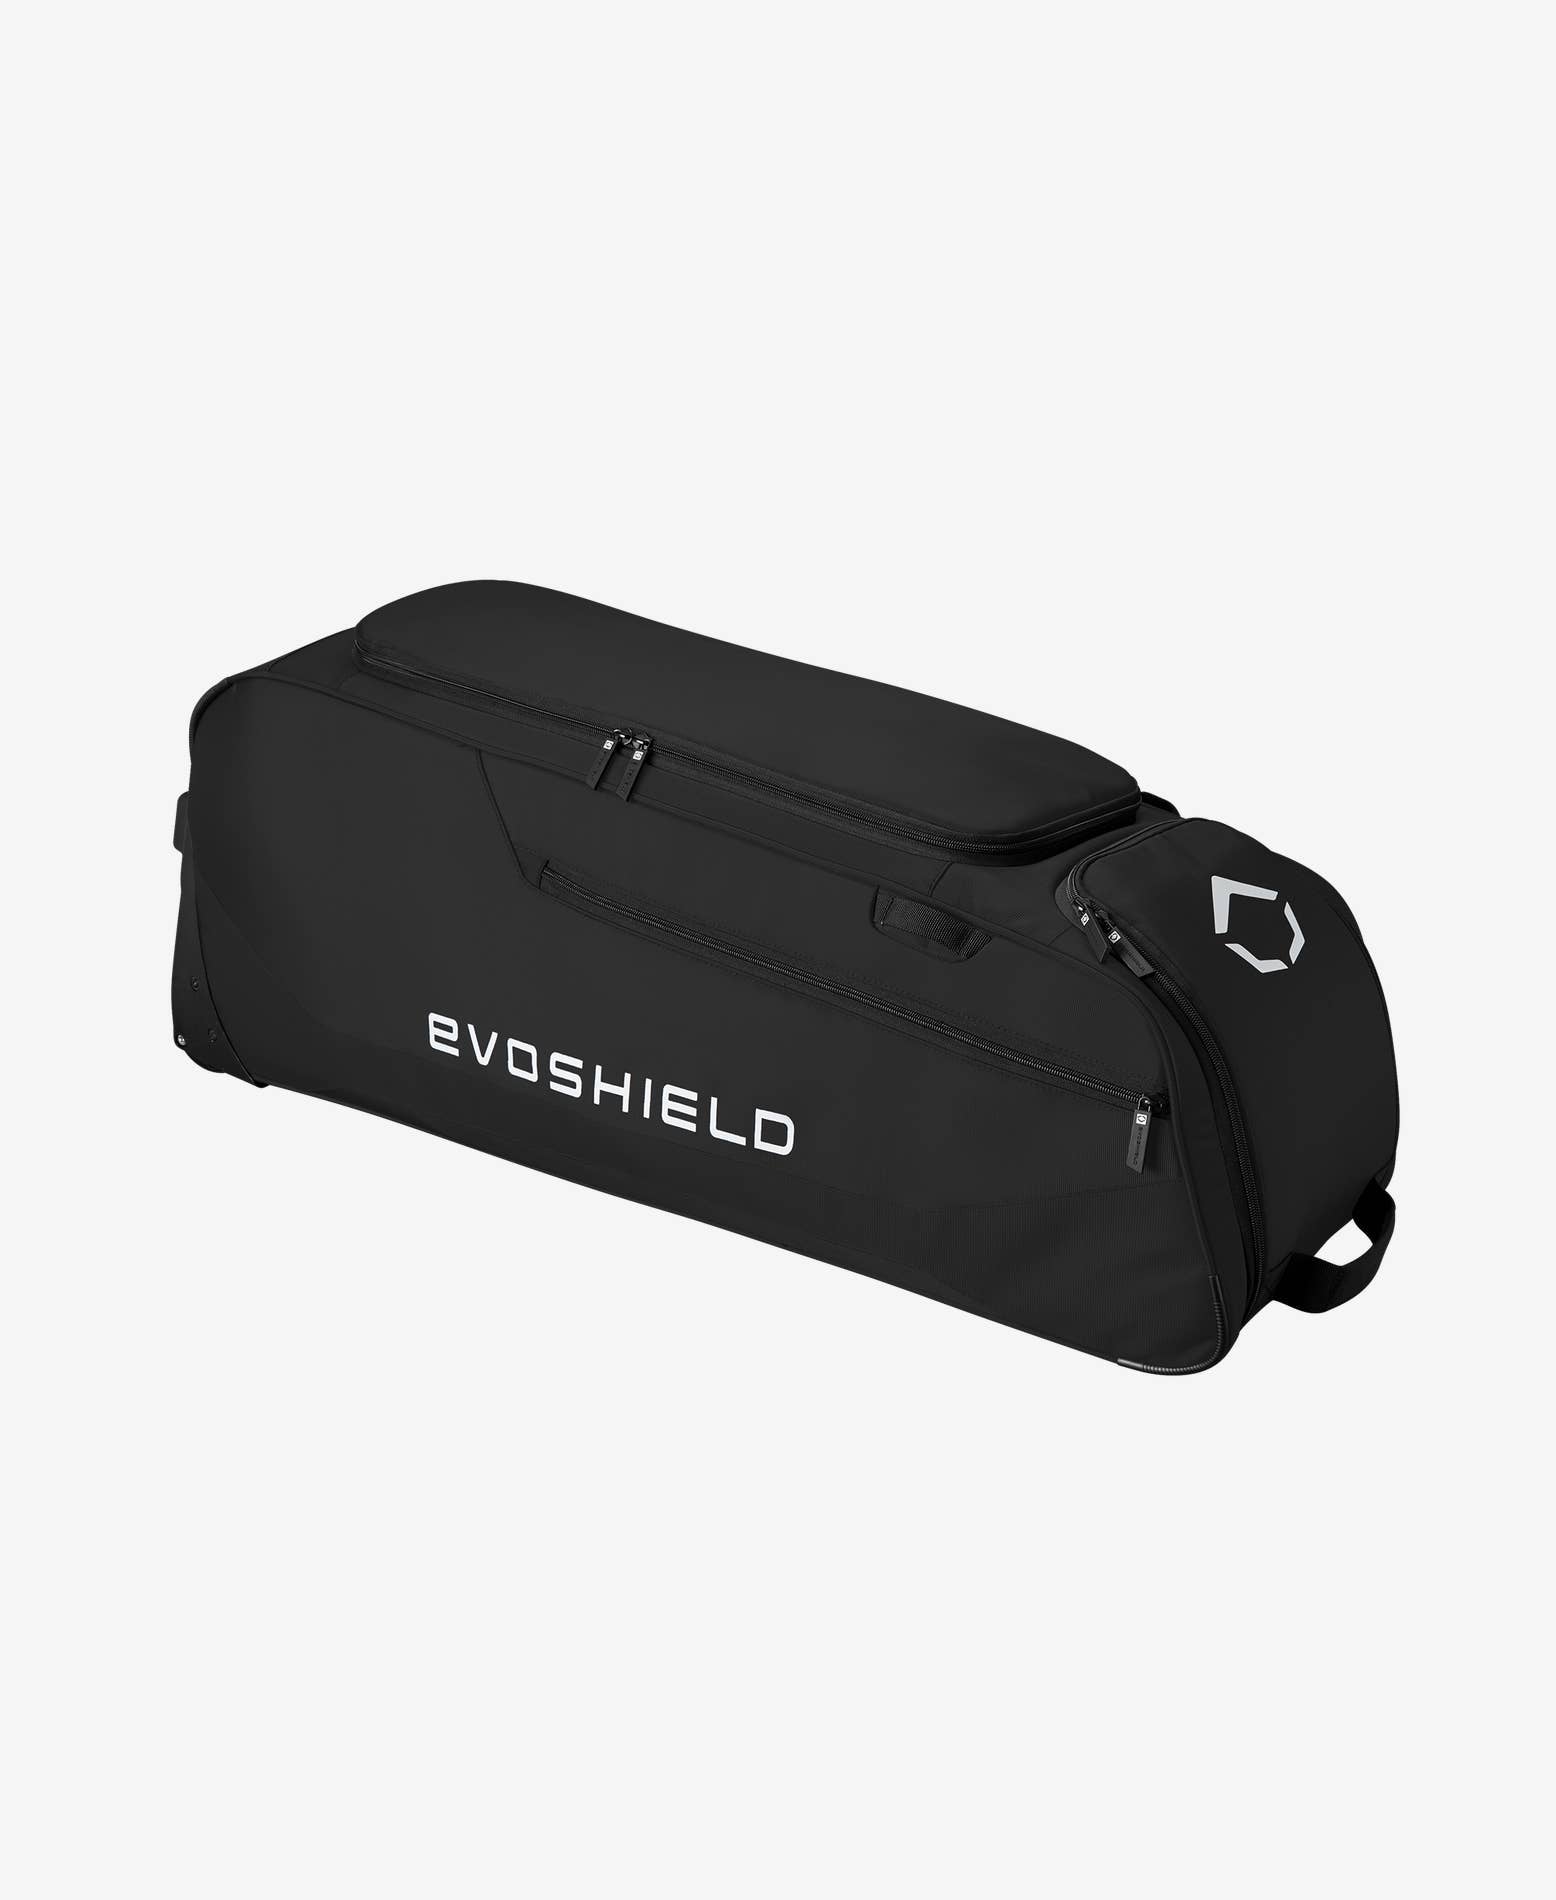 Evoshield Standout Wheeled Bag Accessories Wilson Black  